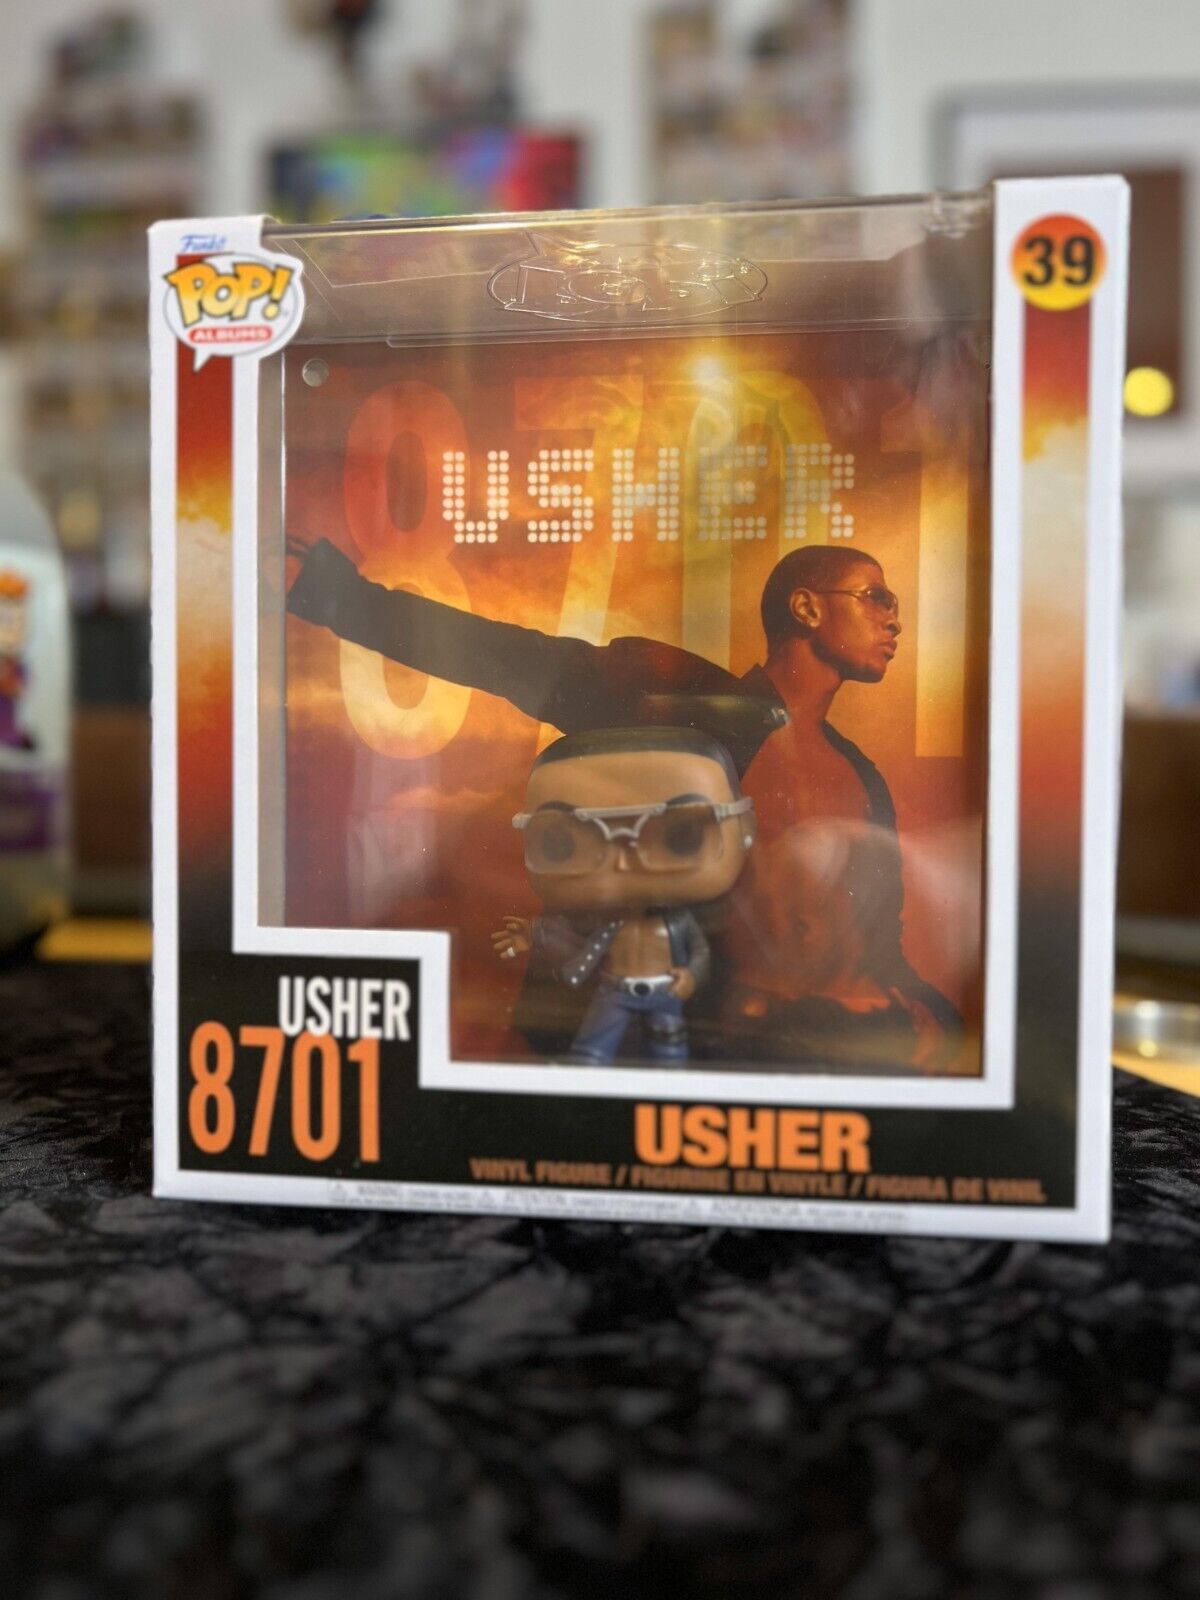 Funko Pop Albums #39 Usher 8701 Figure in Hard Case